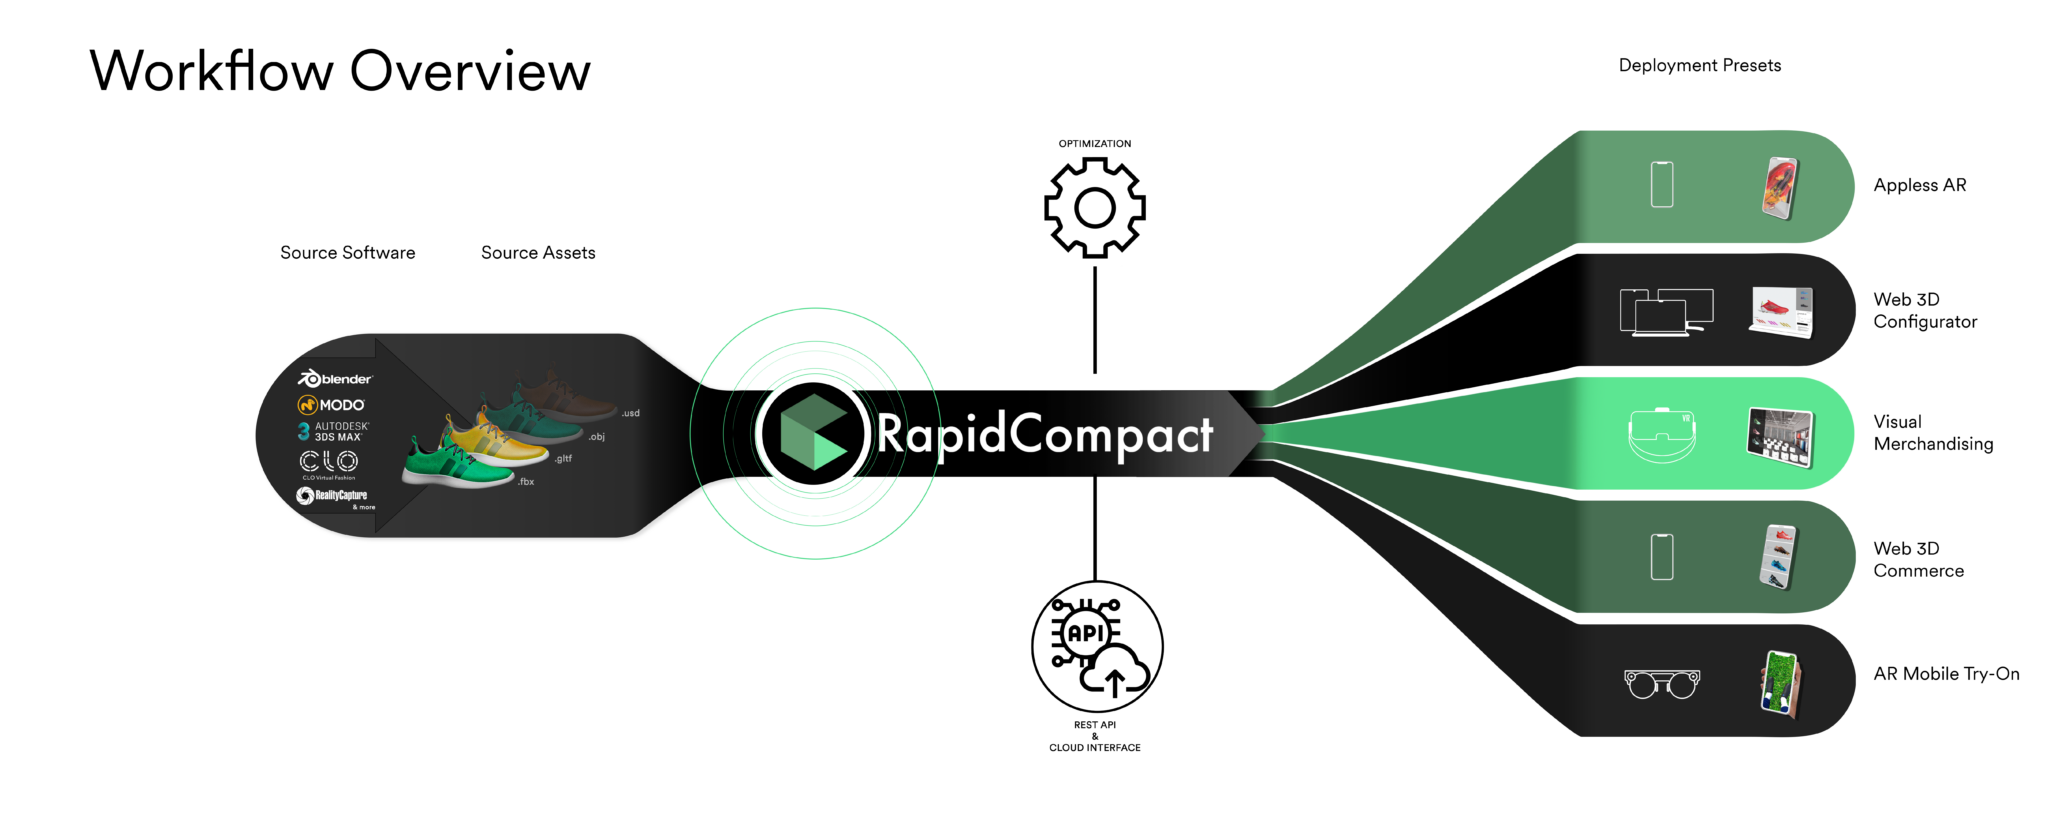 RapidCompact workflow